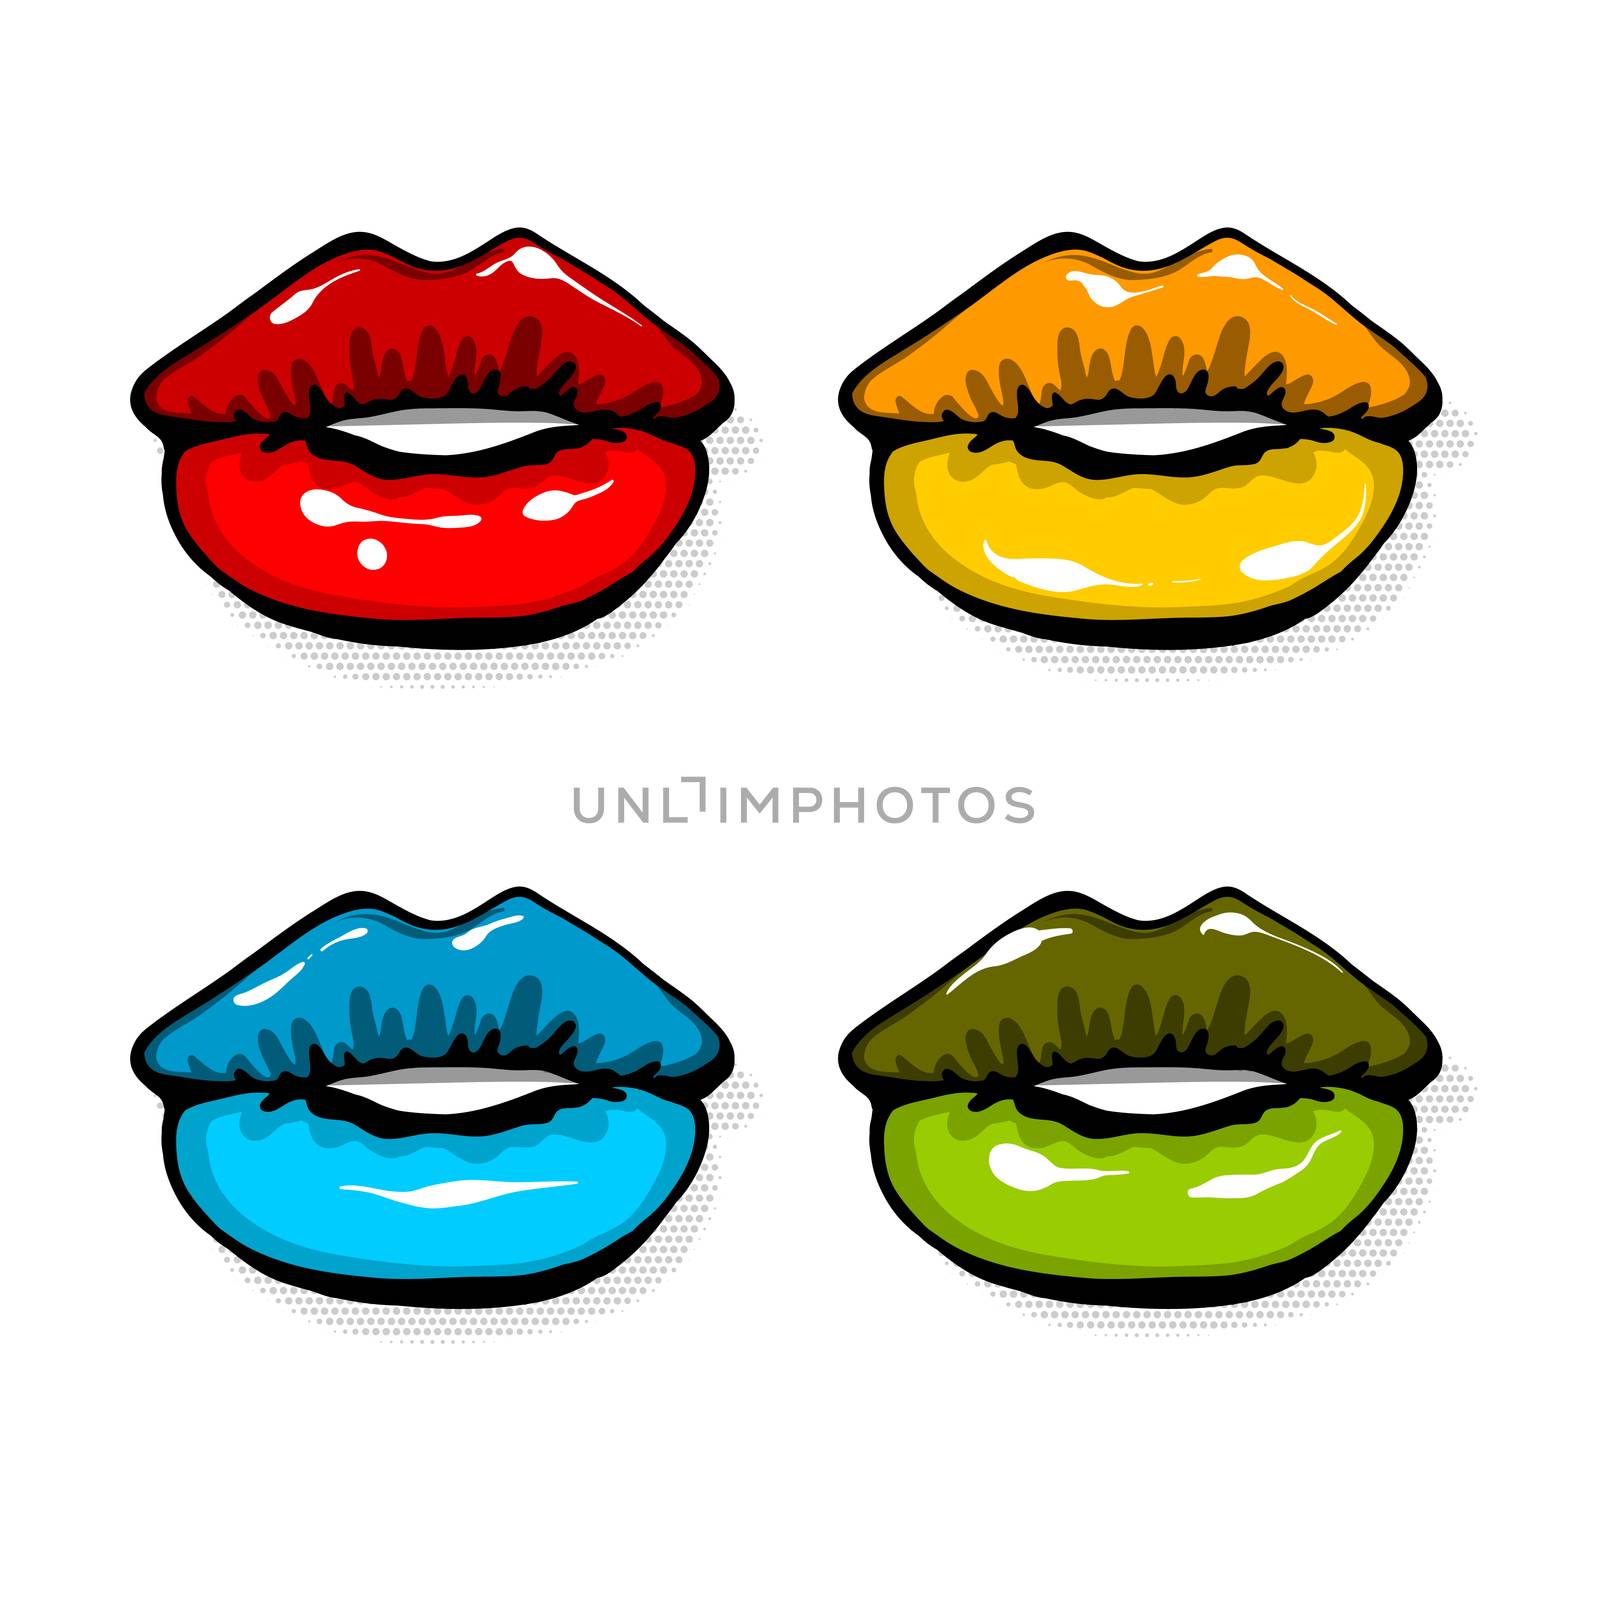 Open mouth woman lips togue pop art style by Kapitosh